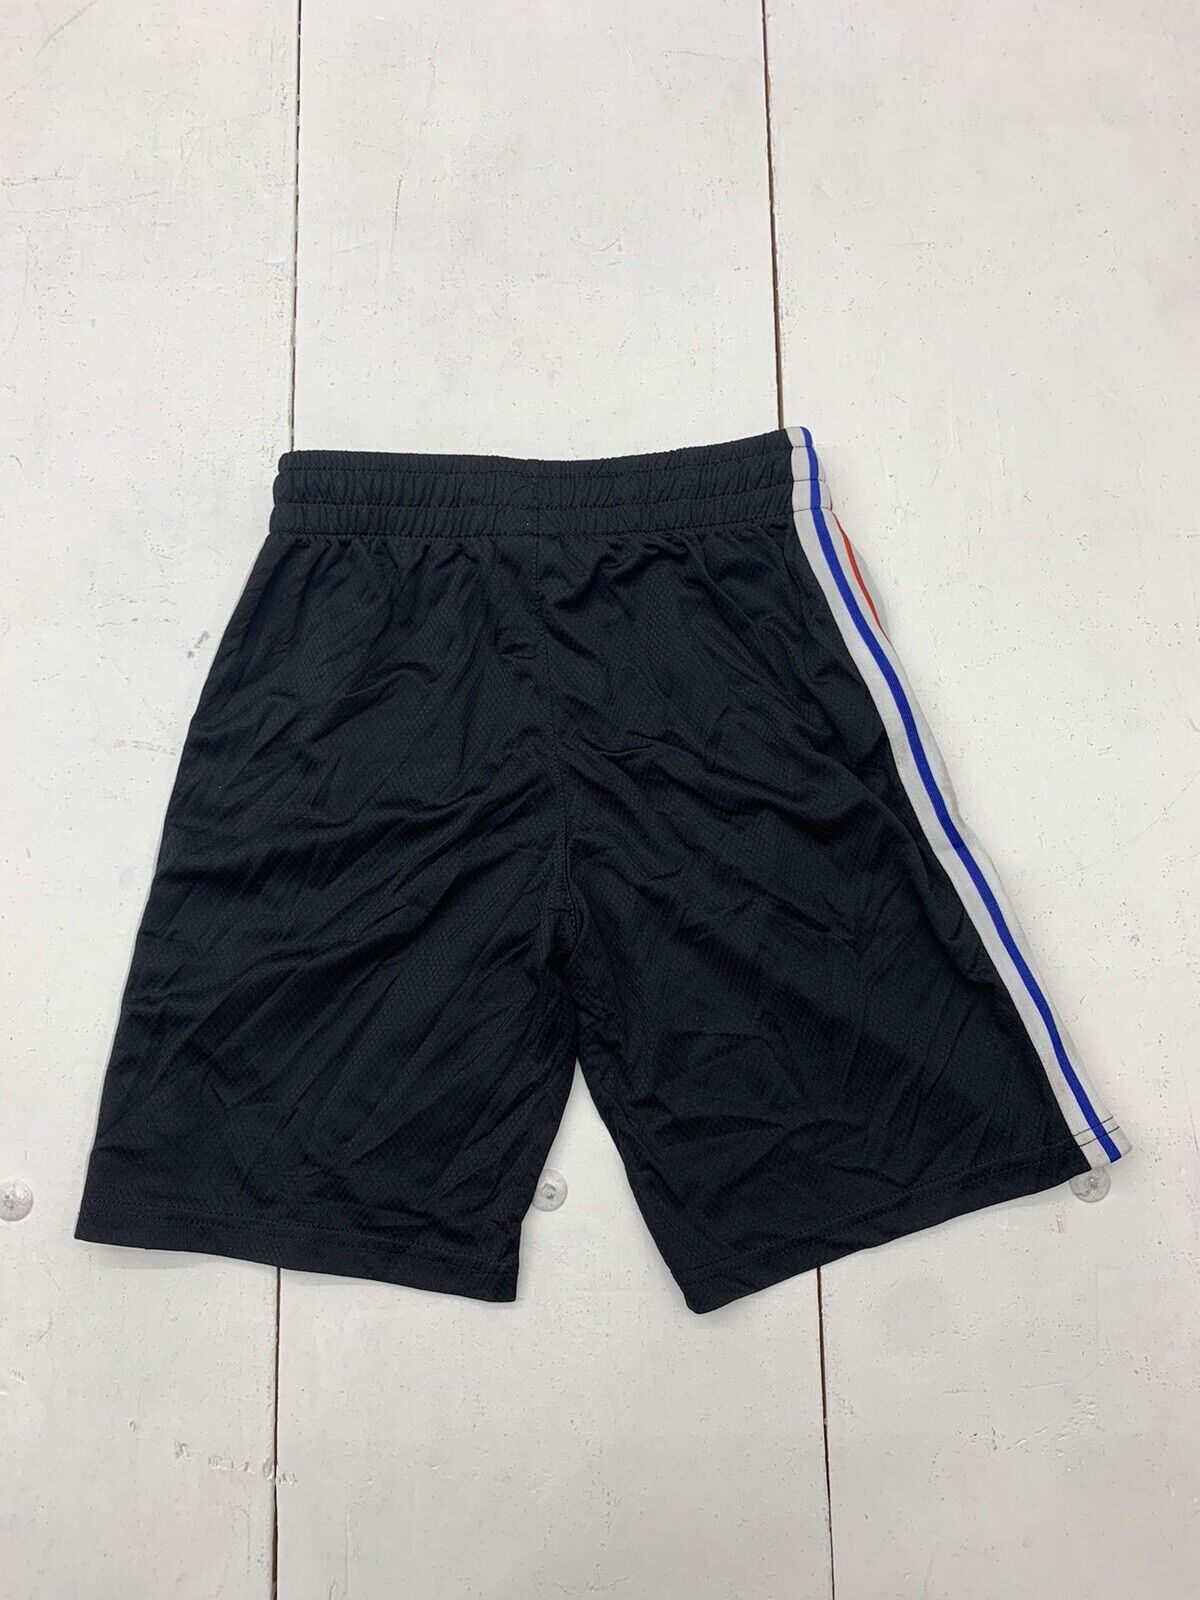 NBA boys Black Athletic Shorts Size Large - beyond exchange